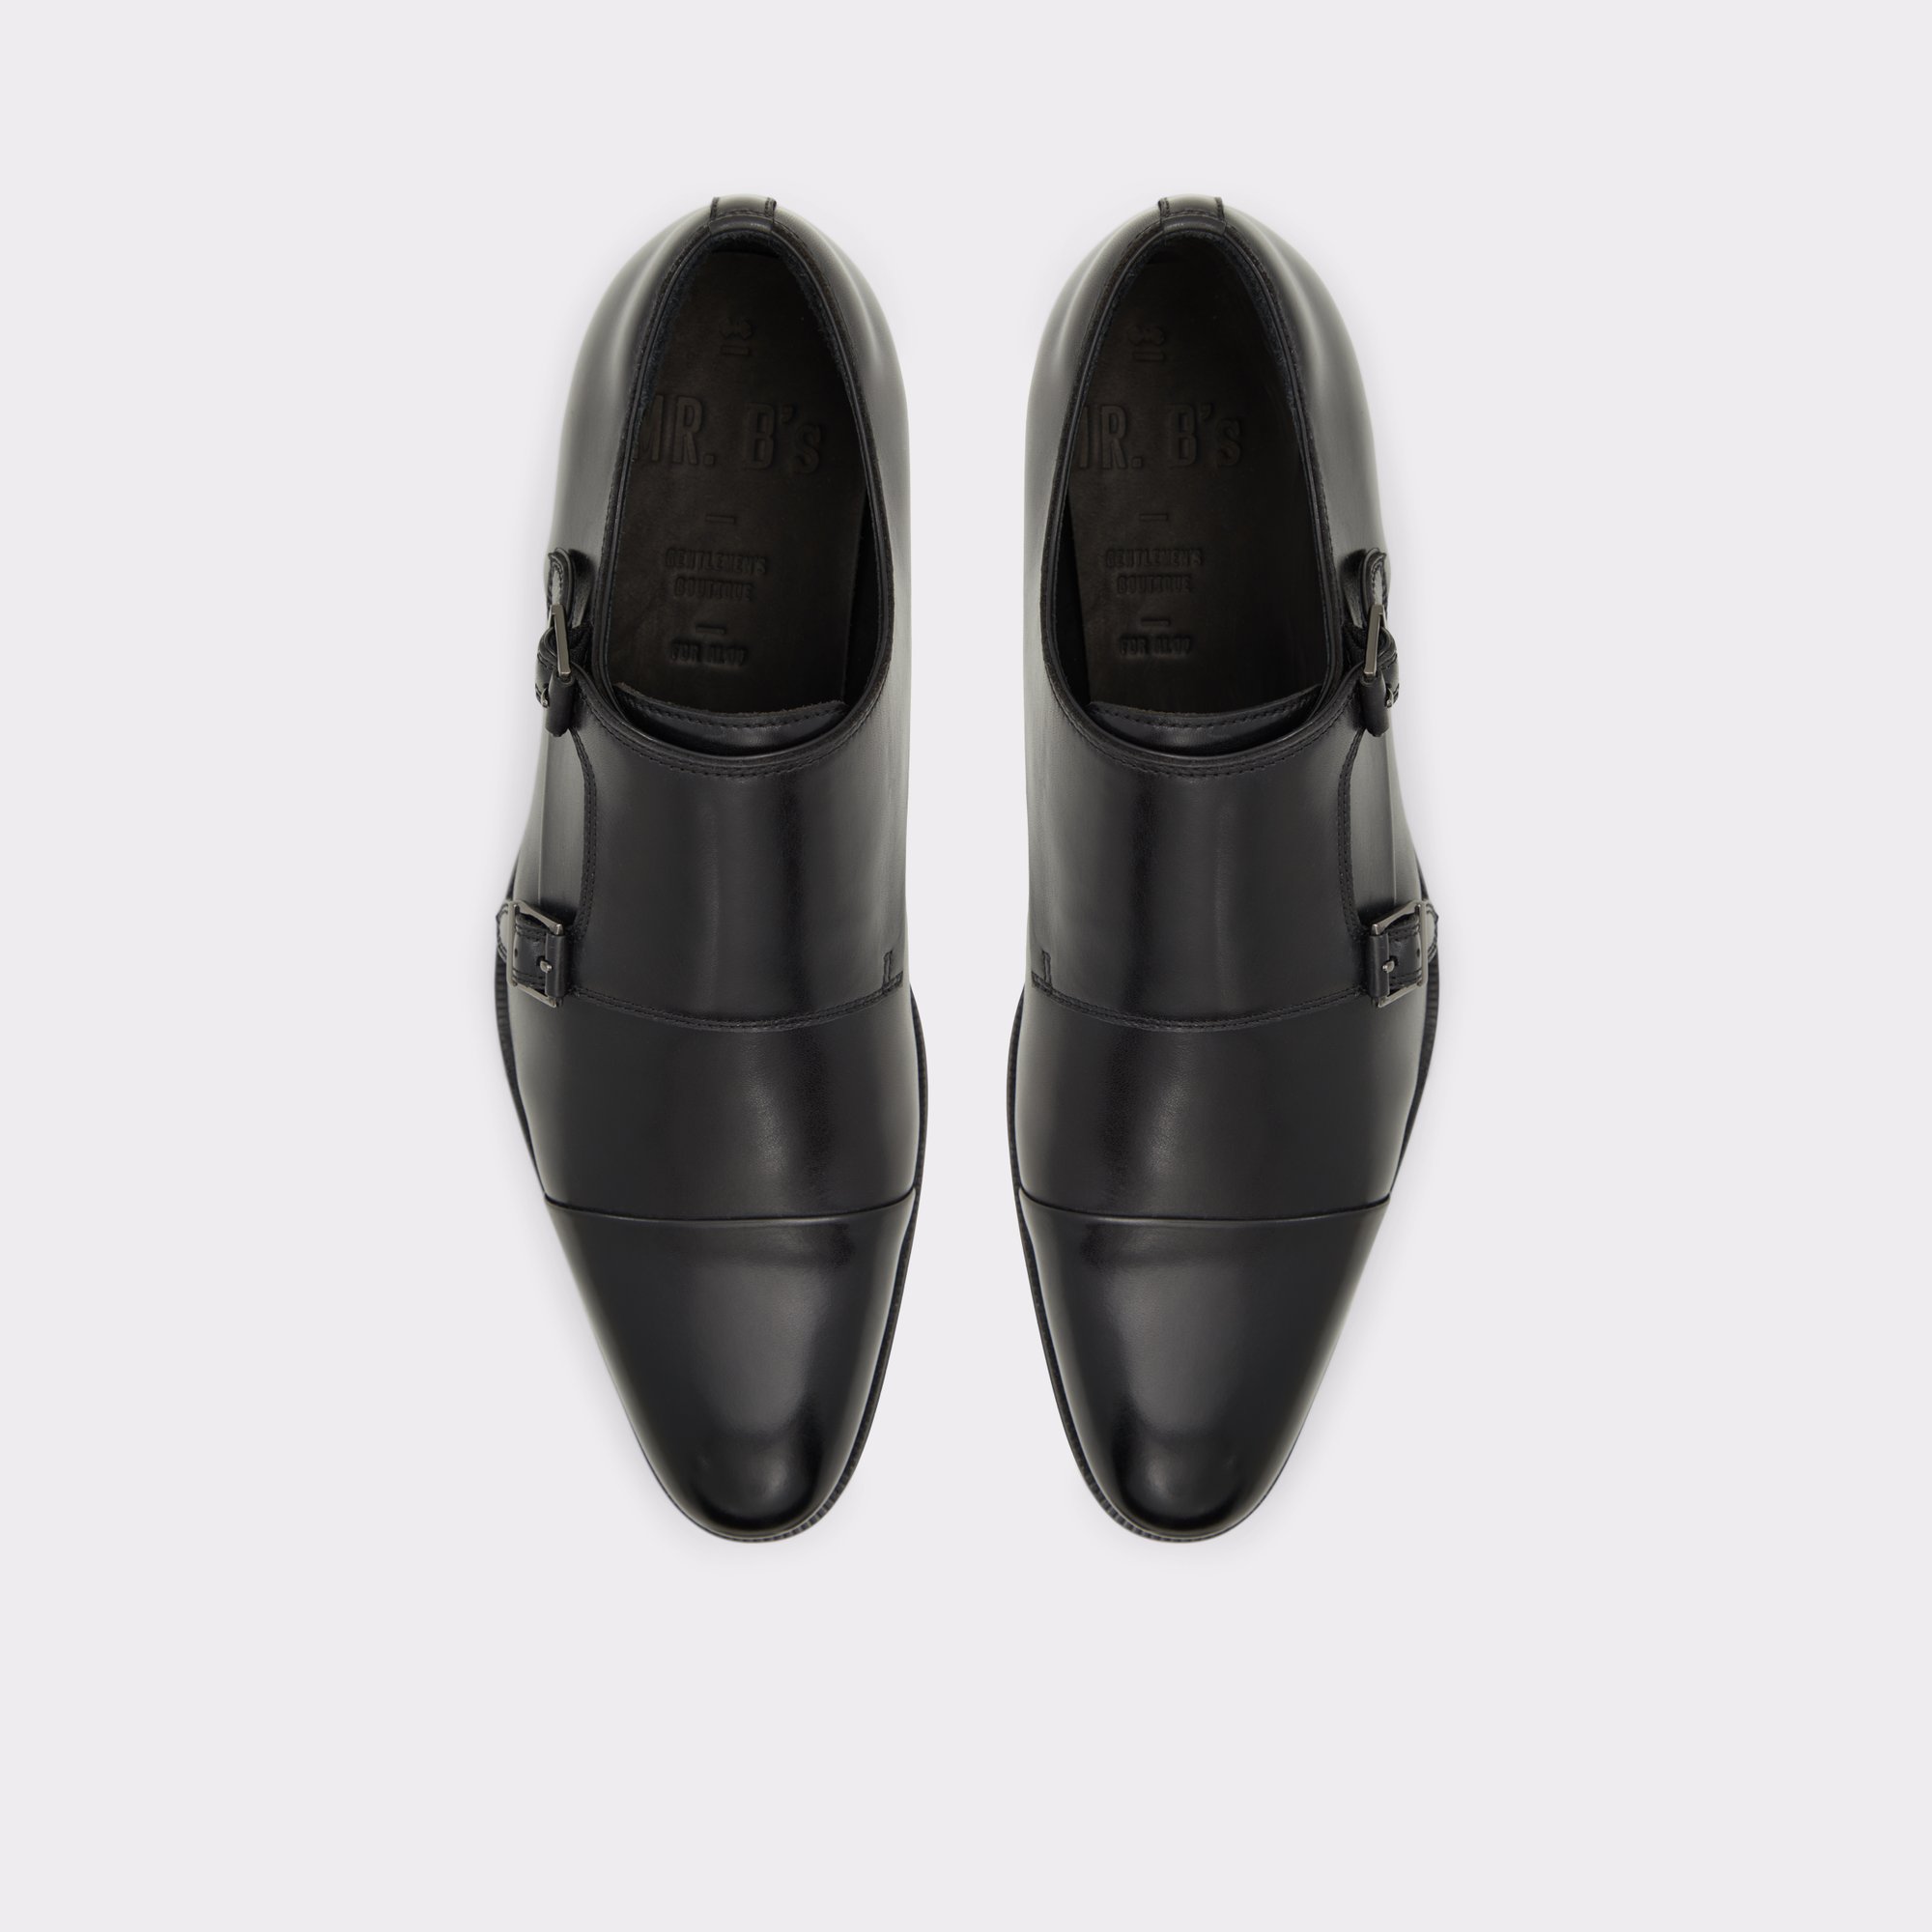 Axwell Black Men's Dress Shoes | ALDO Canada